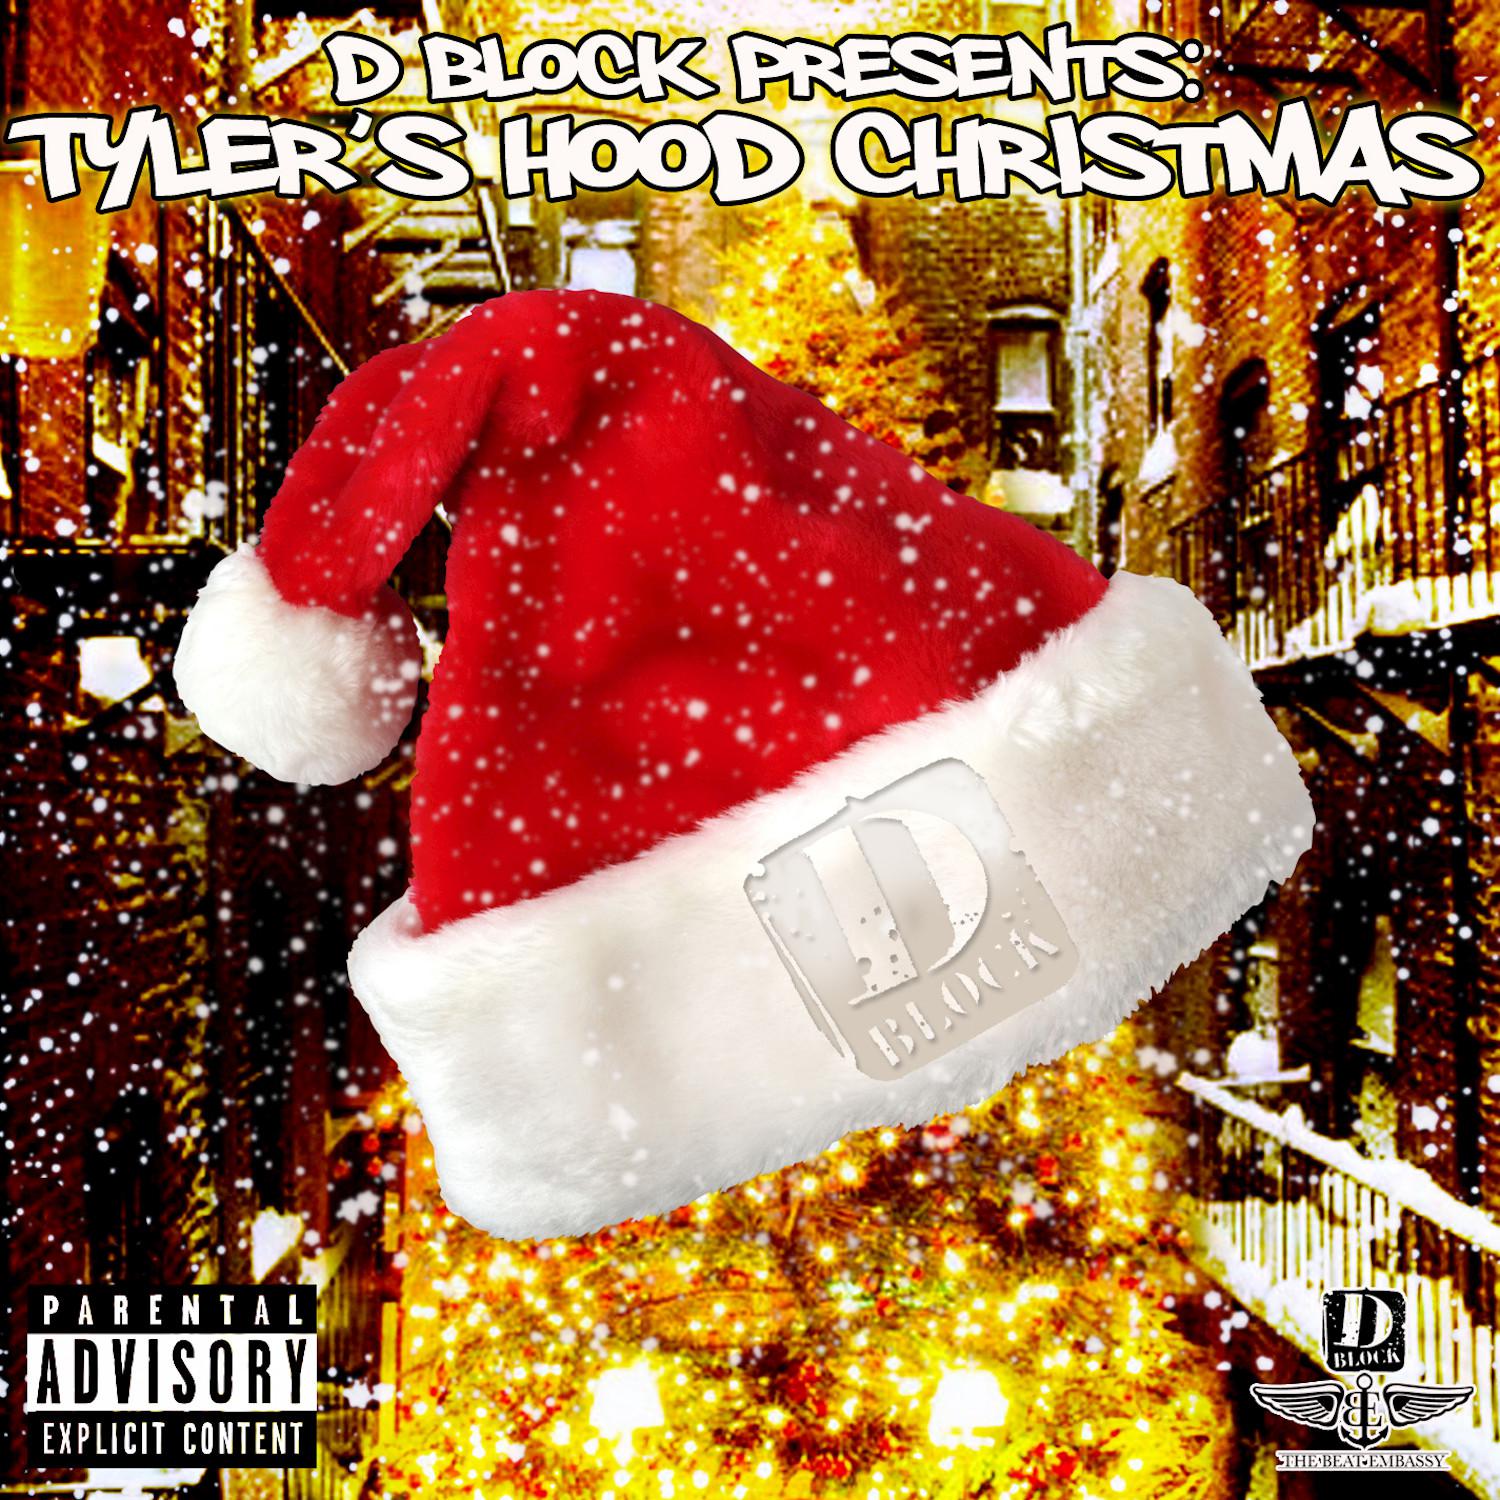 D-Block Presents Tyler's Hood Christmas